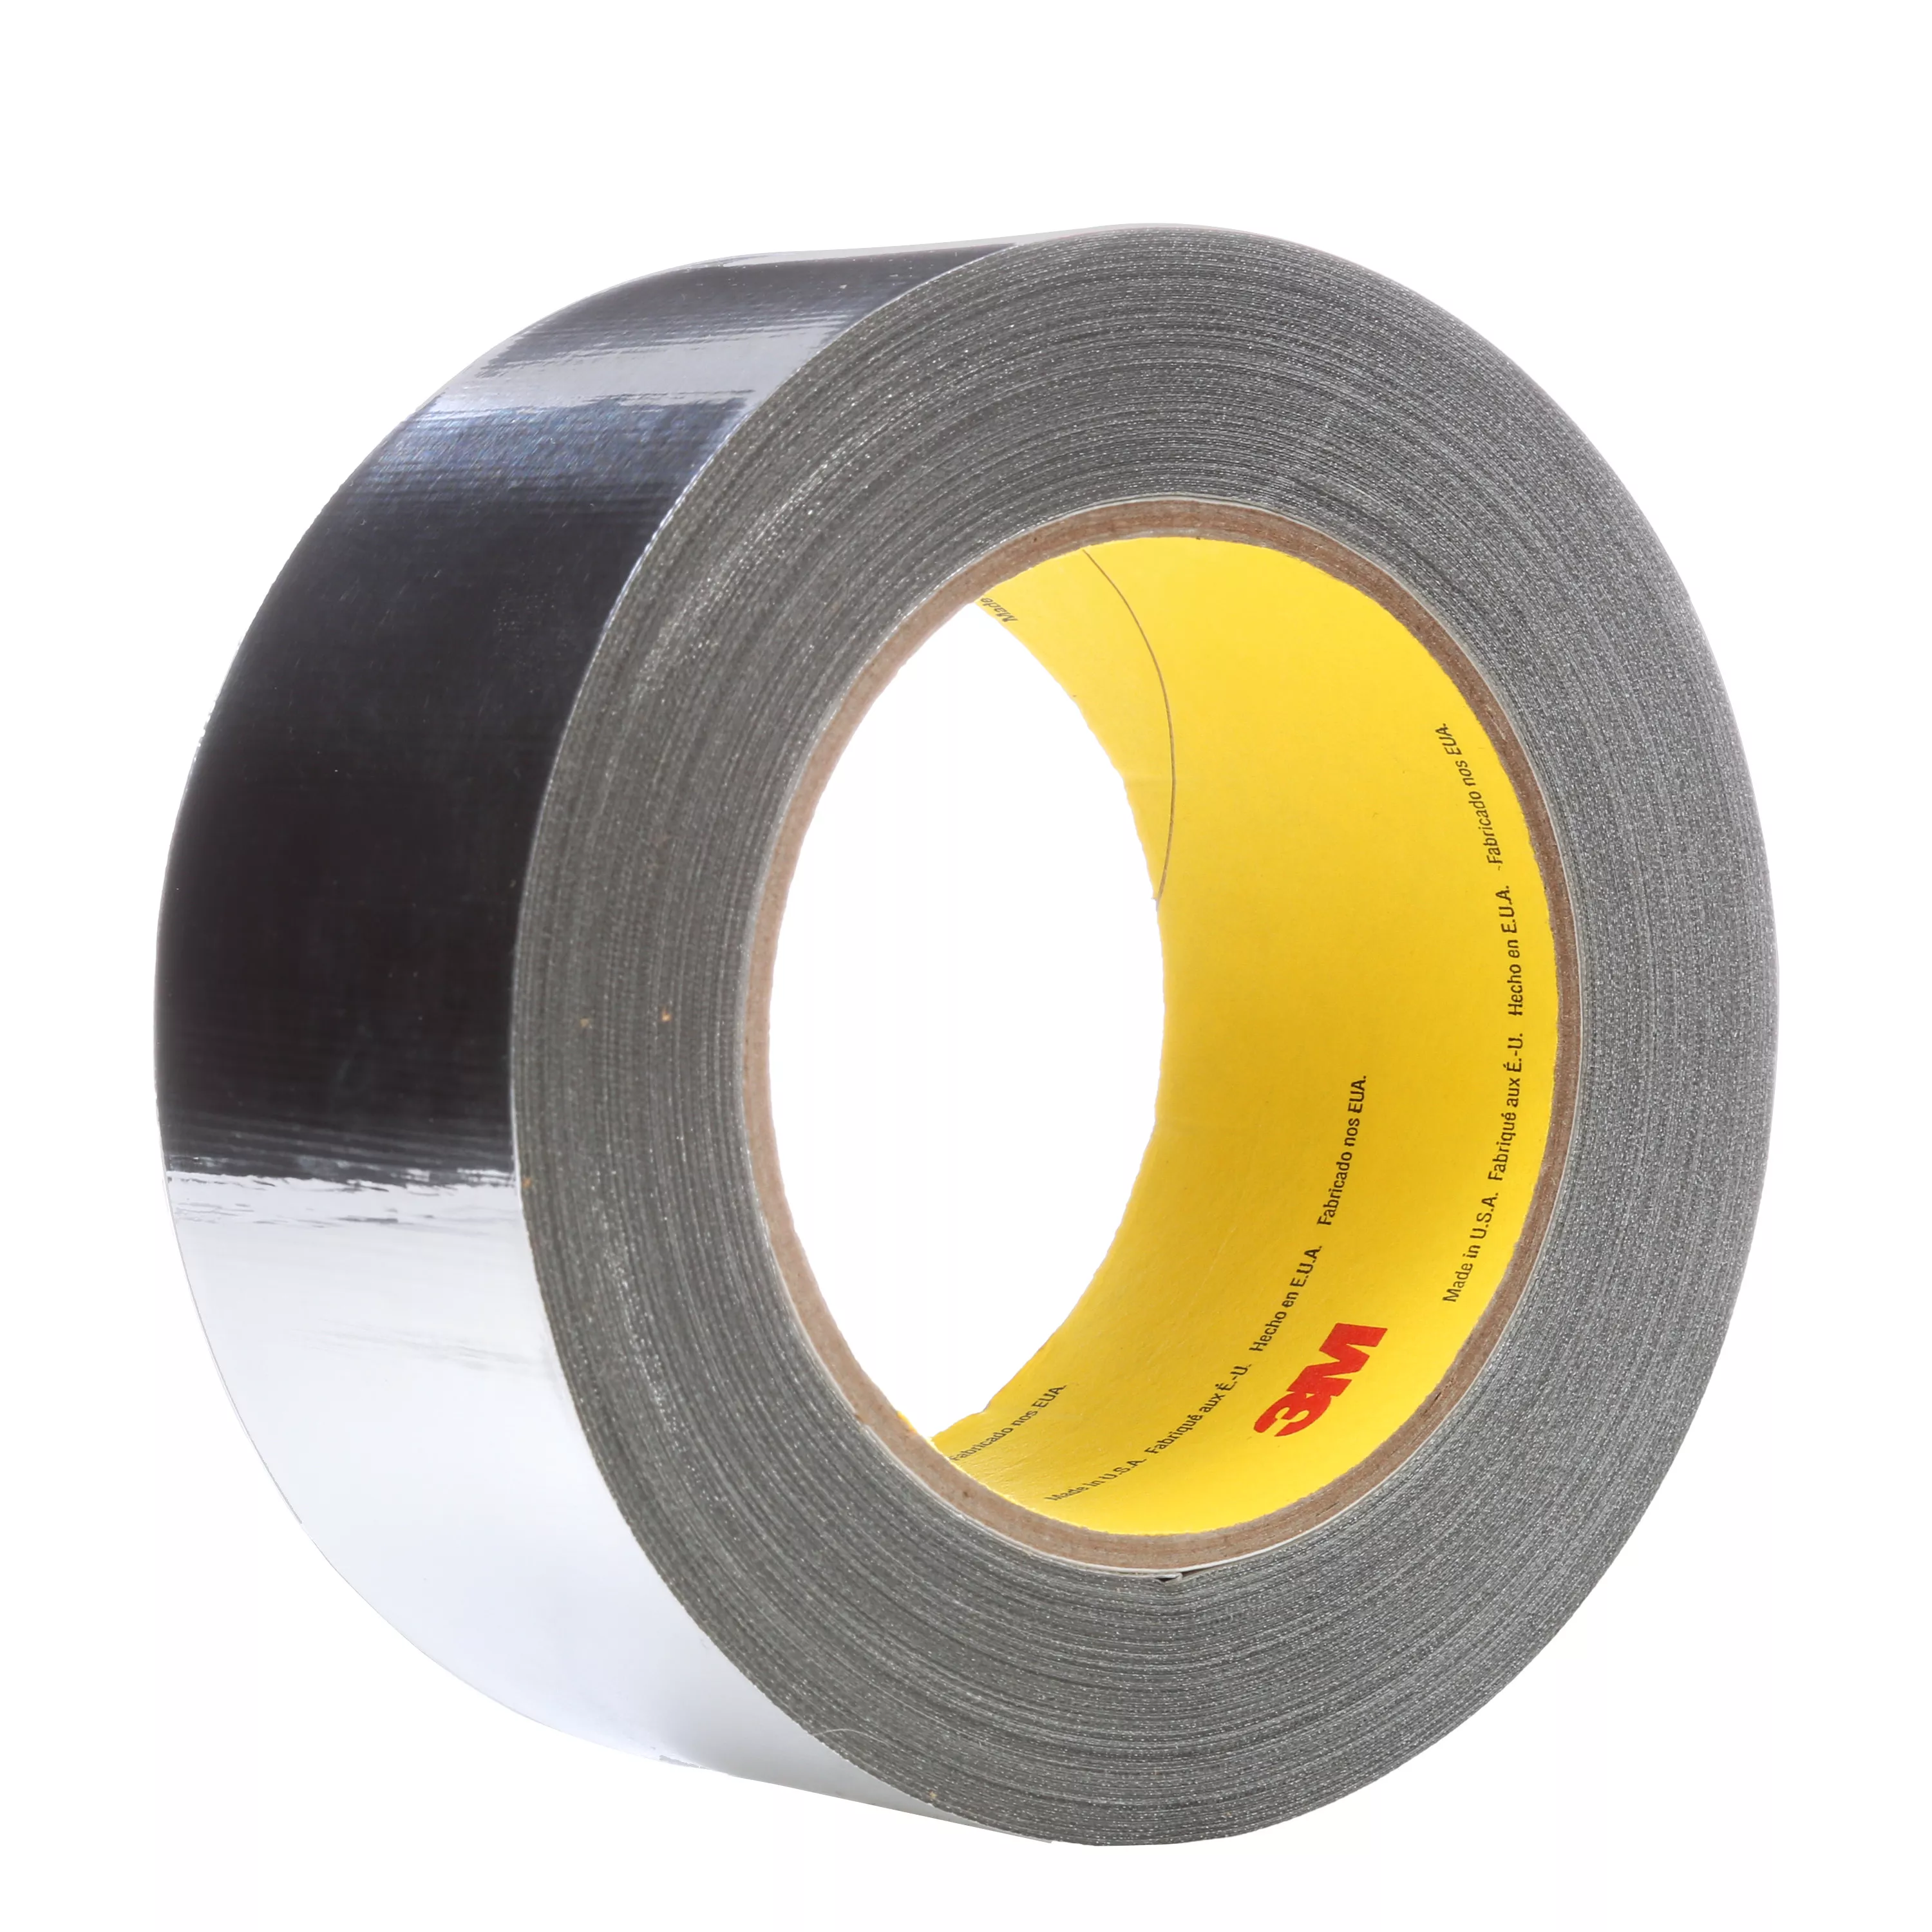 3M™ High Temperature Aluminum Foil Glass Cloth Tape 363, Silver, 1 in x
36 yd, 7.3 mil, 36 Roll/Case